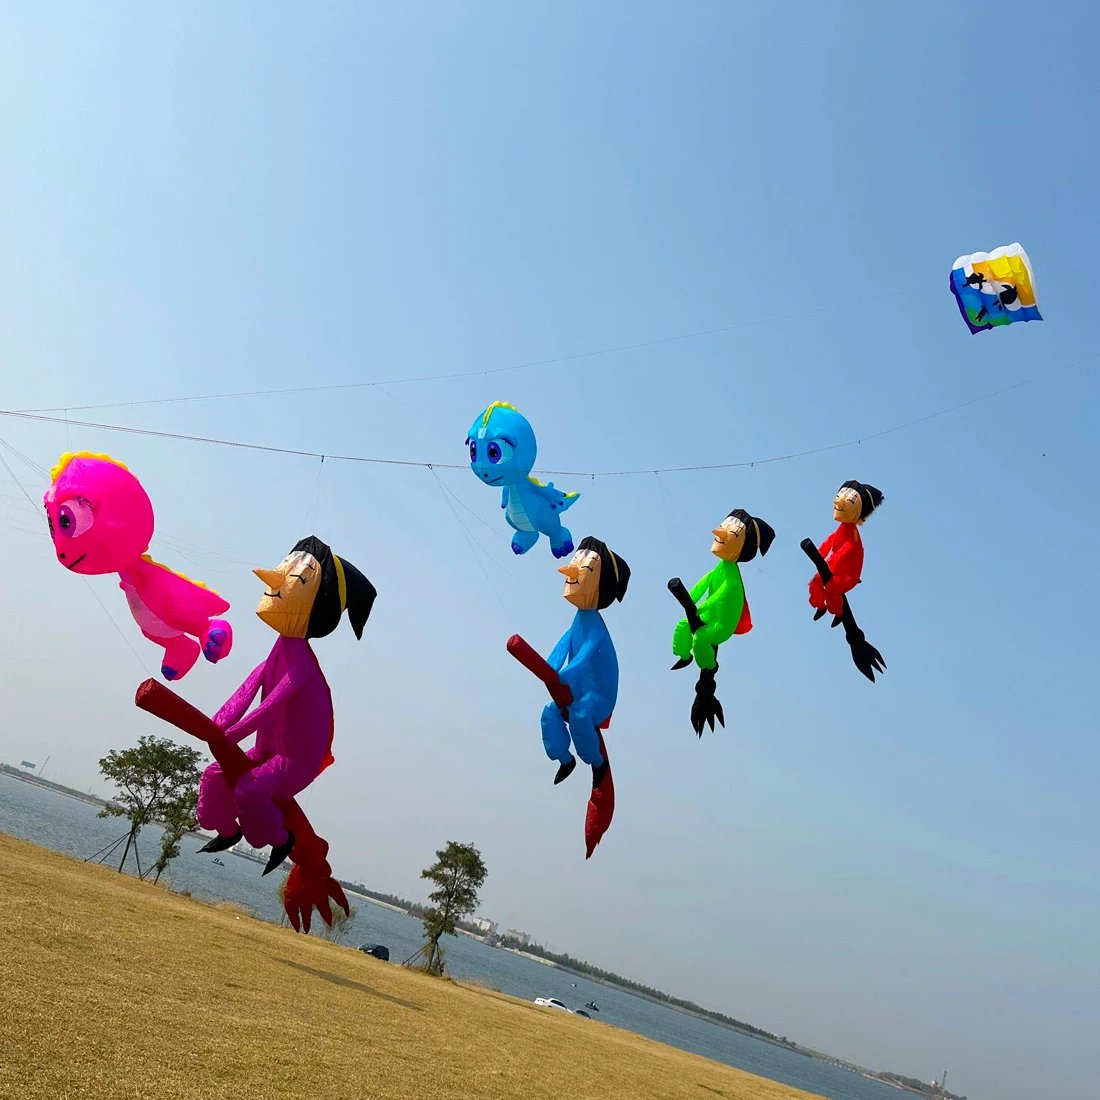 9KM 4m Sorceress Kite Line Laundry Kite Pendant Soft Inflatable Show Kite for Kite Festival 30D Ripstop Nylon with Bag